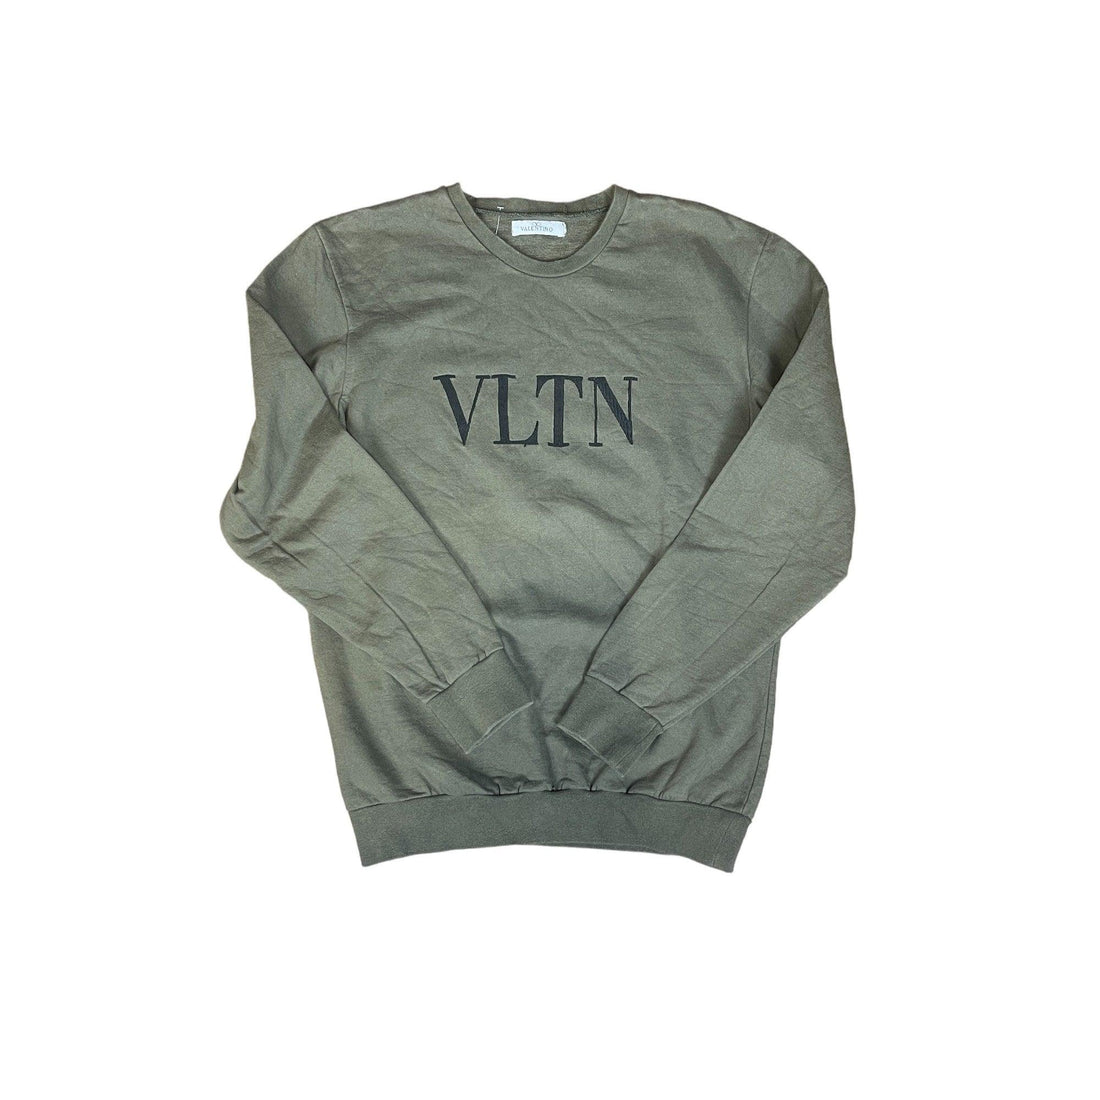 Vintage 90s Valentino Sweatshirt - Large - The Streetwear Studio